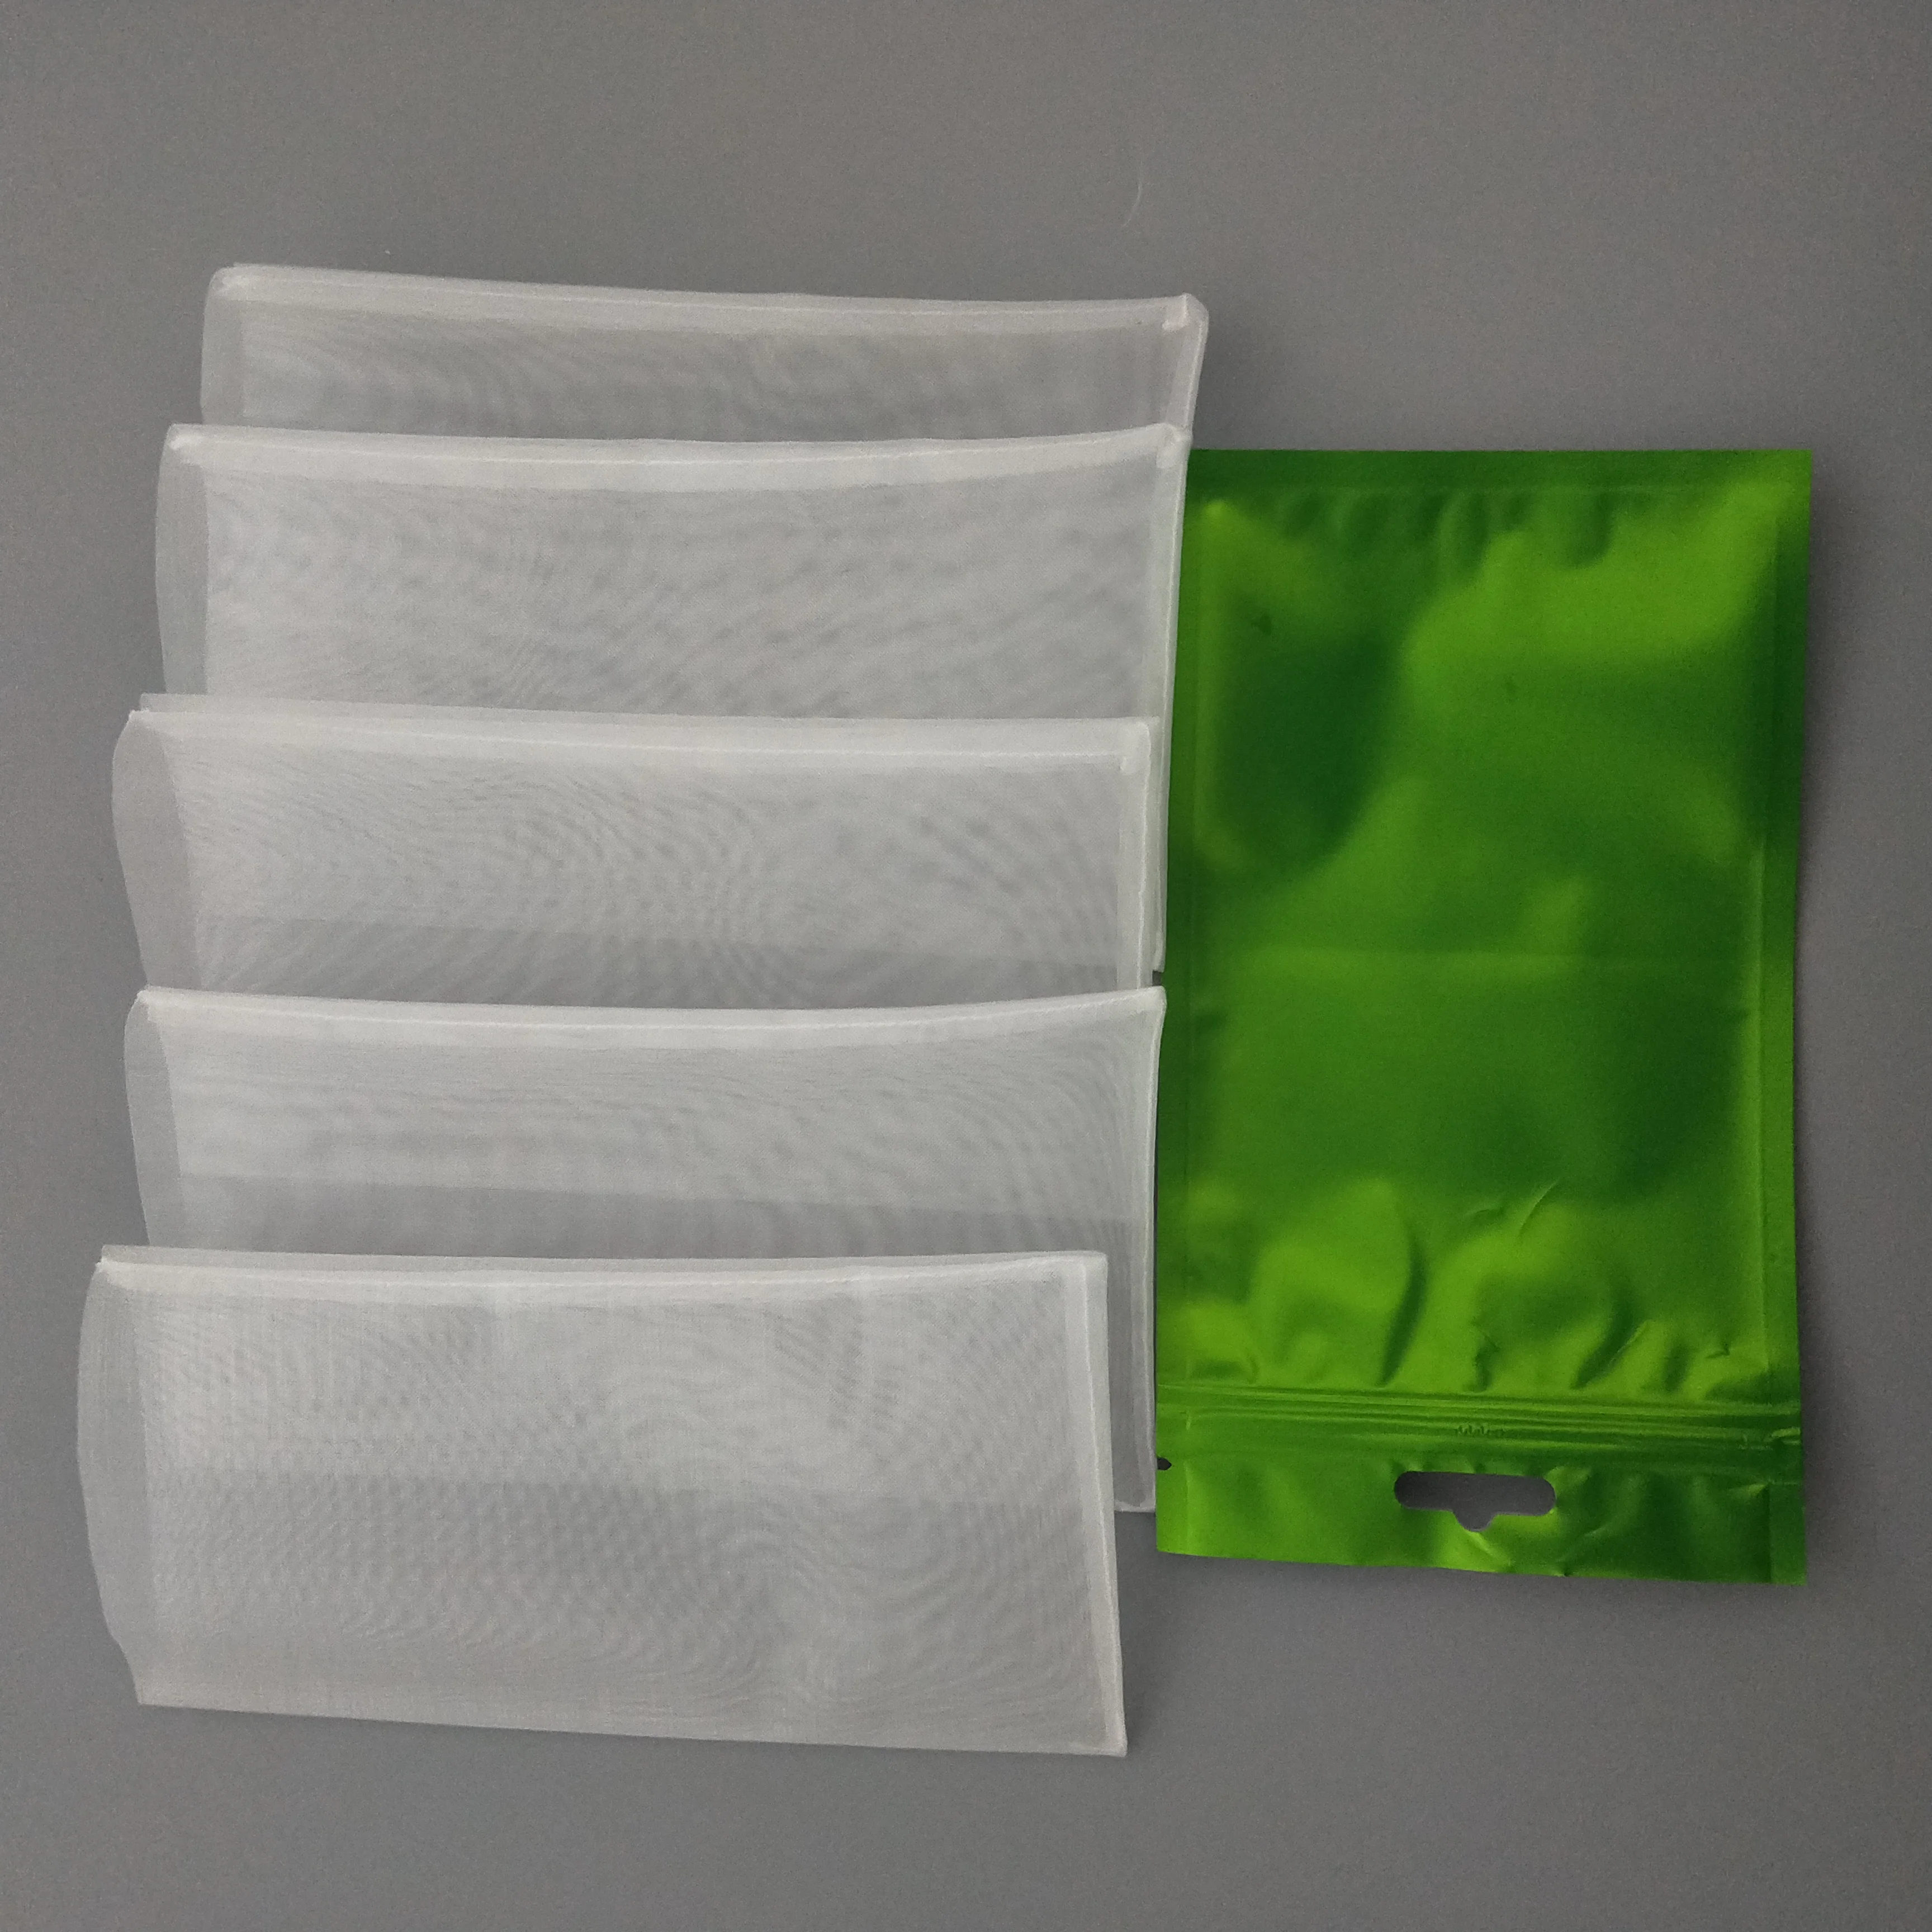 
25 37 45 73 90 120 160 190 Micron Nylon Rosin Press Filter Bags 2'x4.5' 2.5*3.5' 2.5*5'  (62329267850)